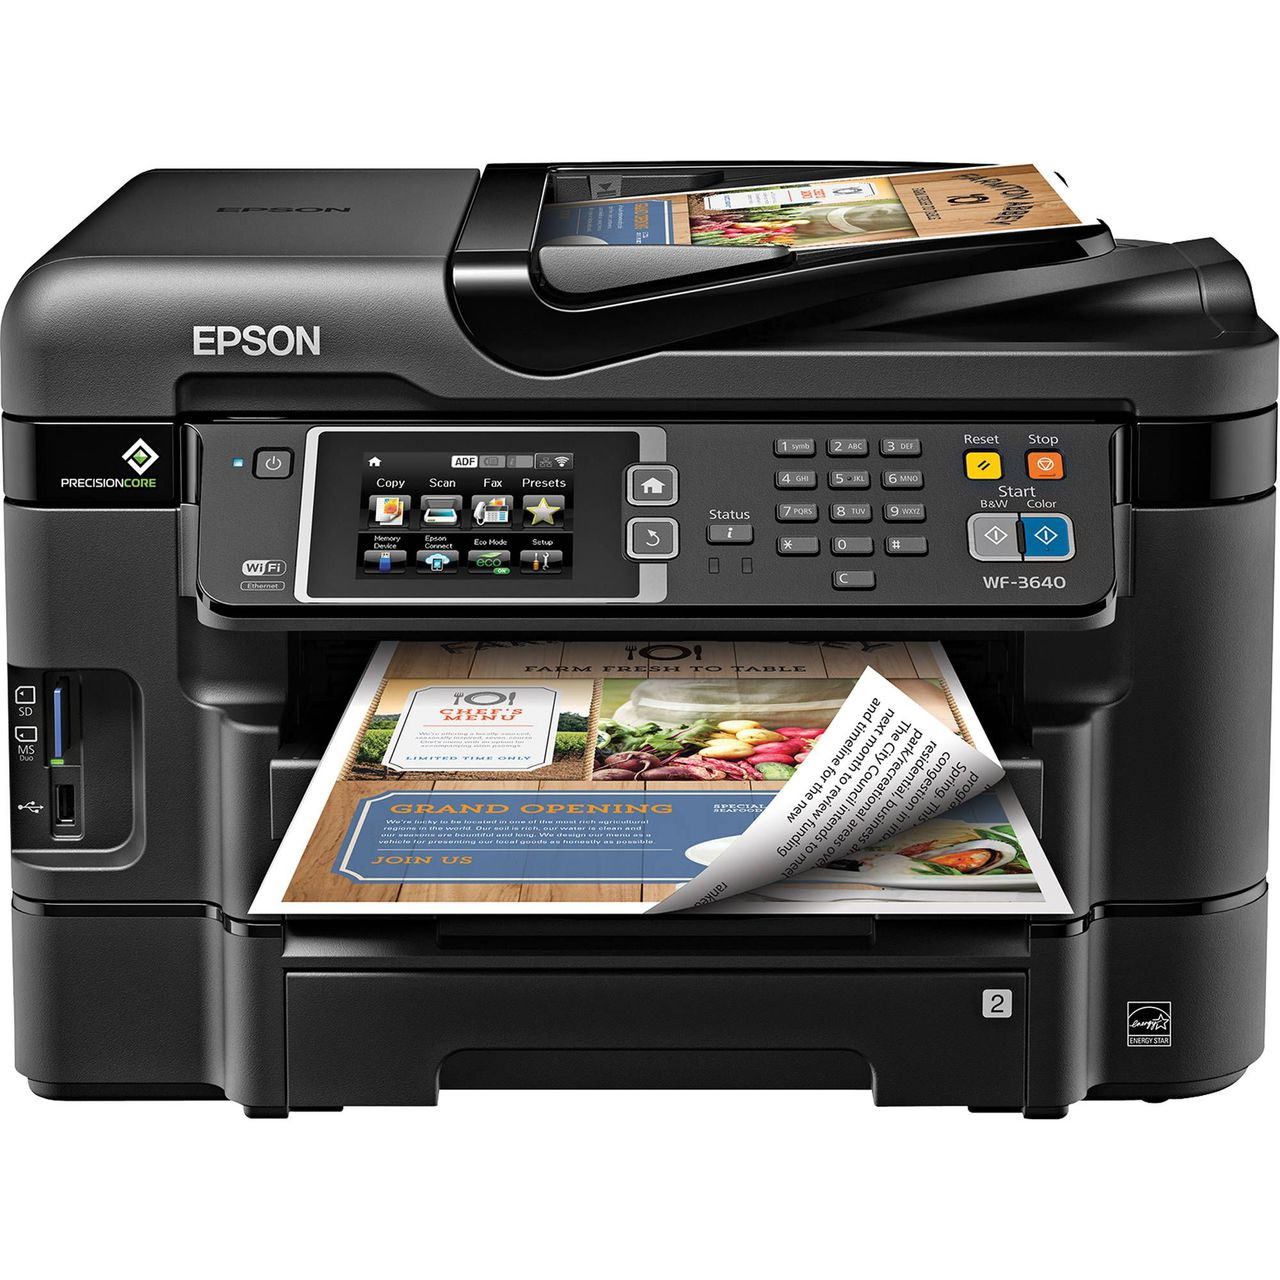 Epson Workforce 3640 Printer Troubleshooting 8121